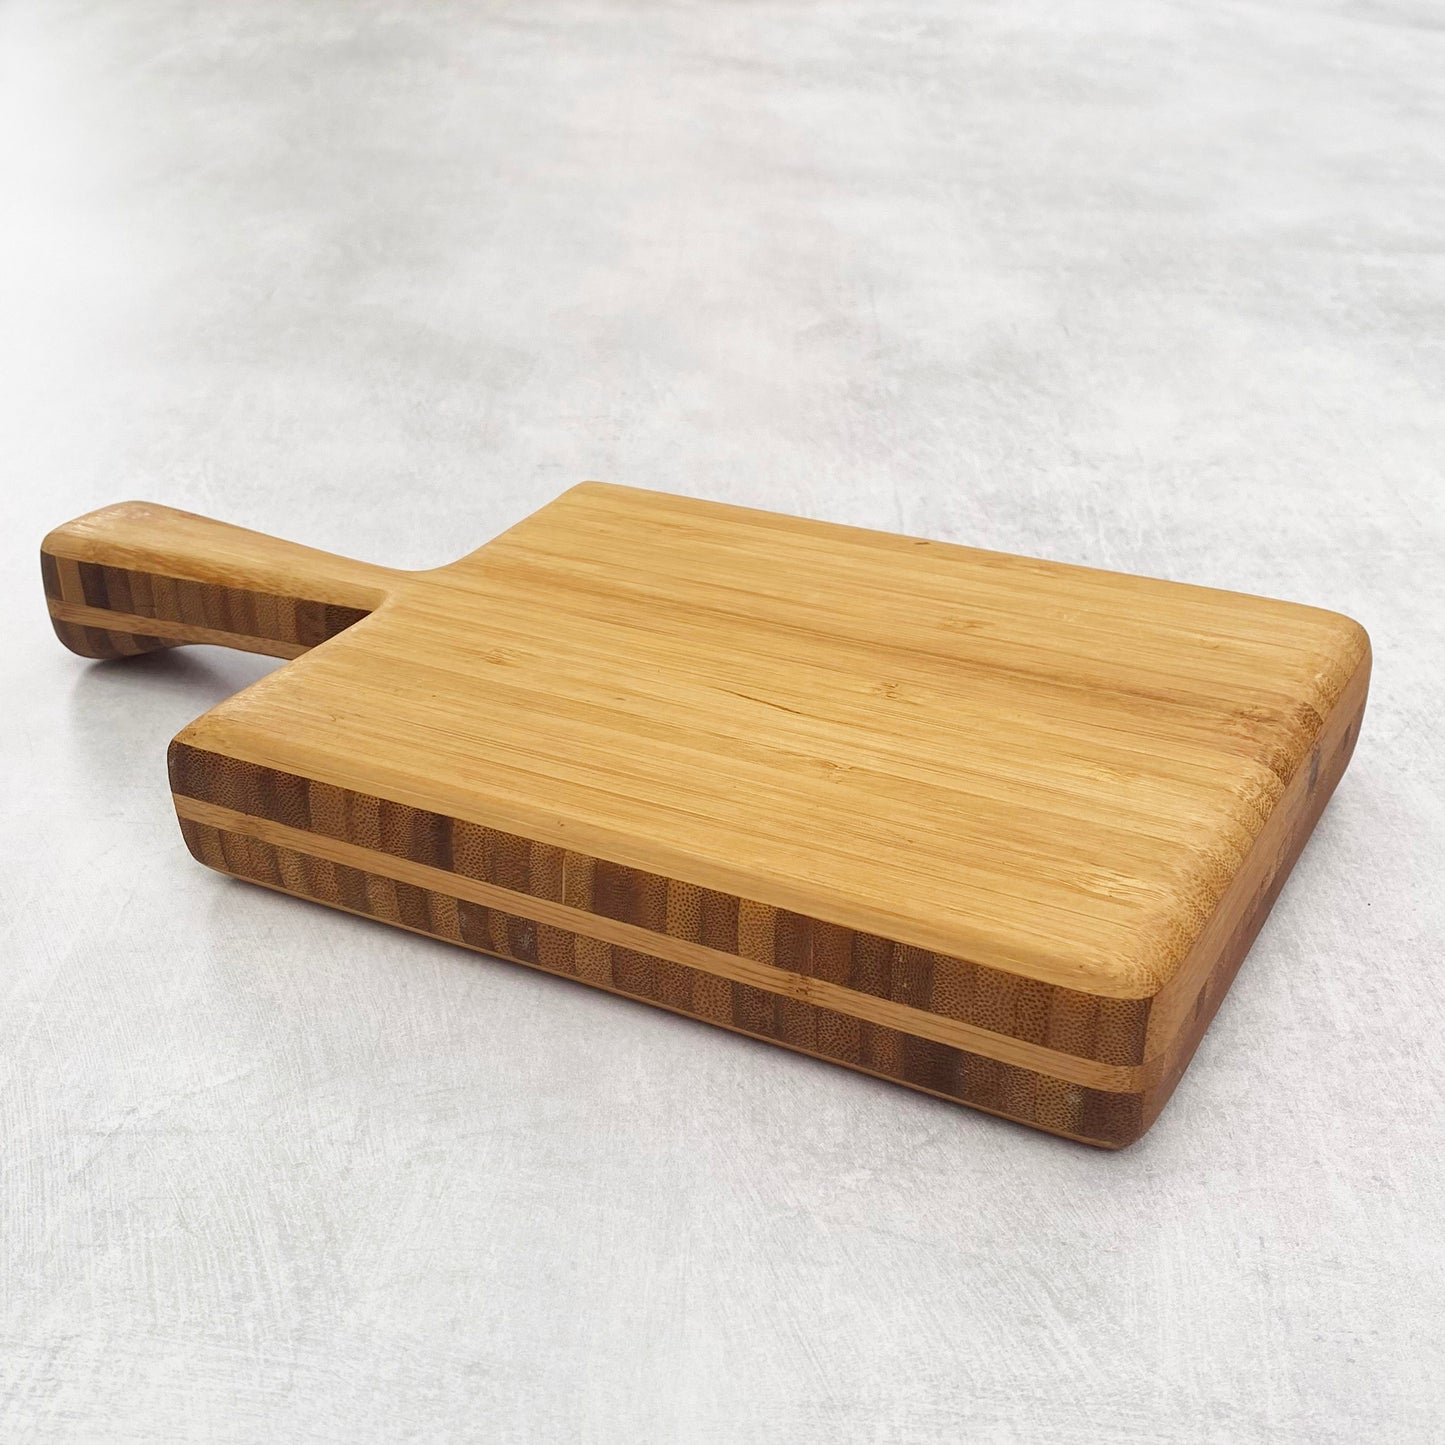 Small Bamboo Board